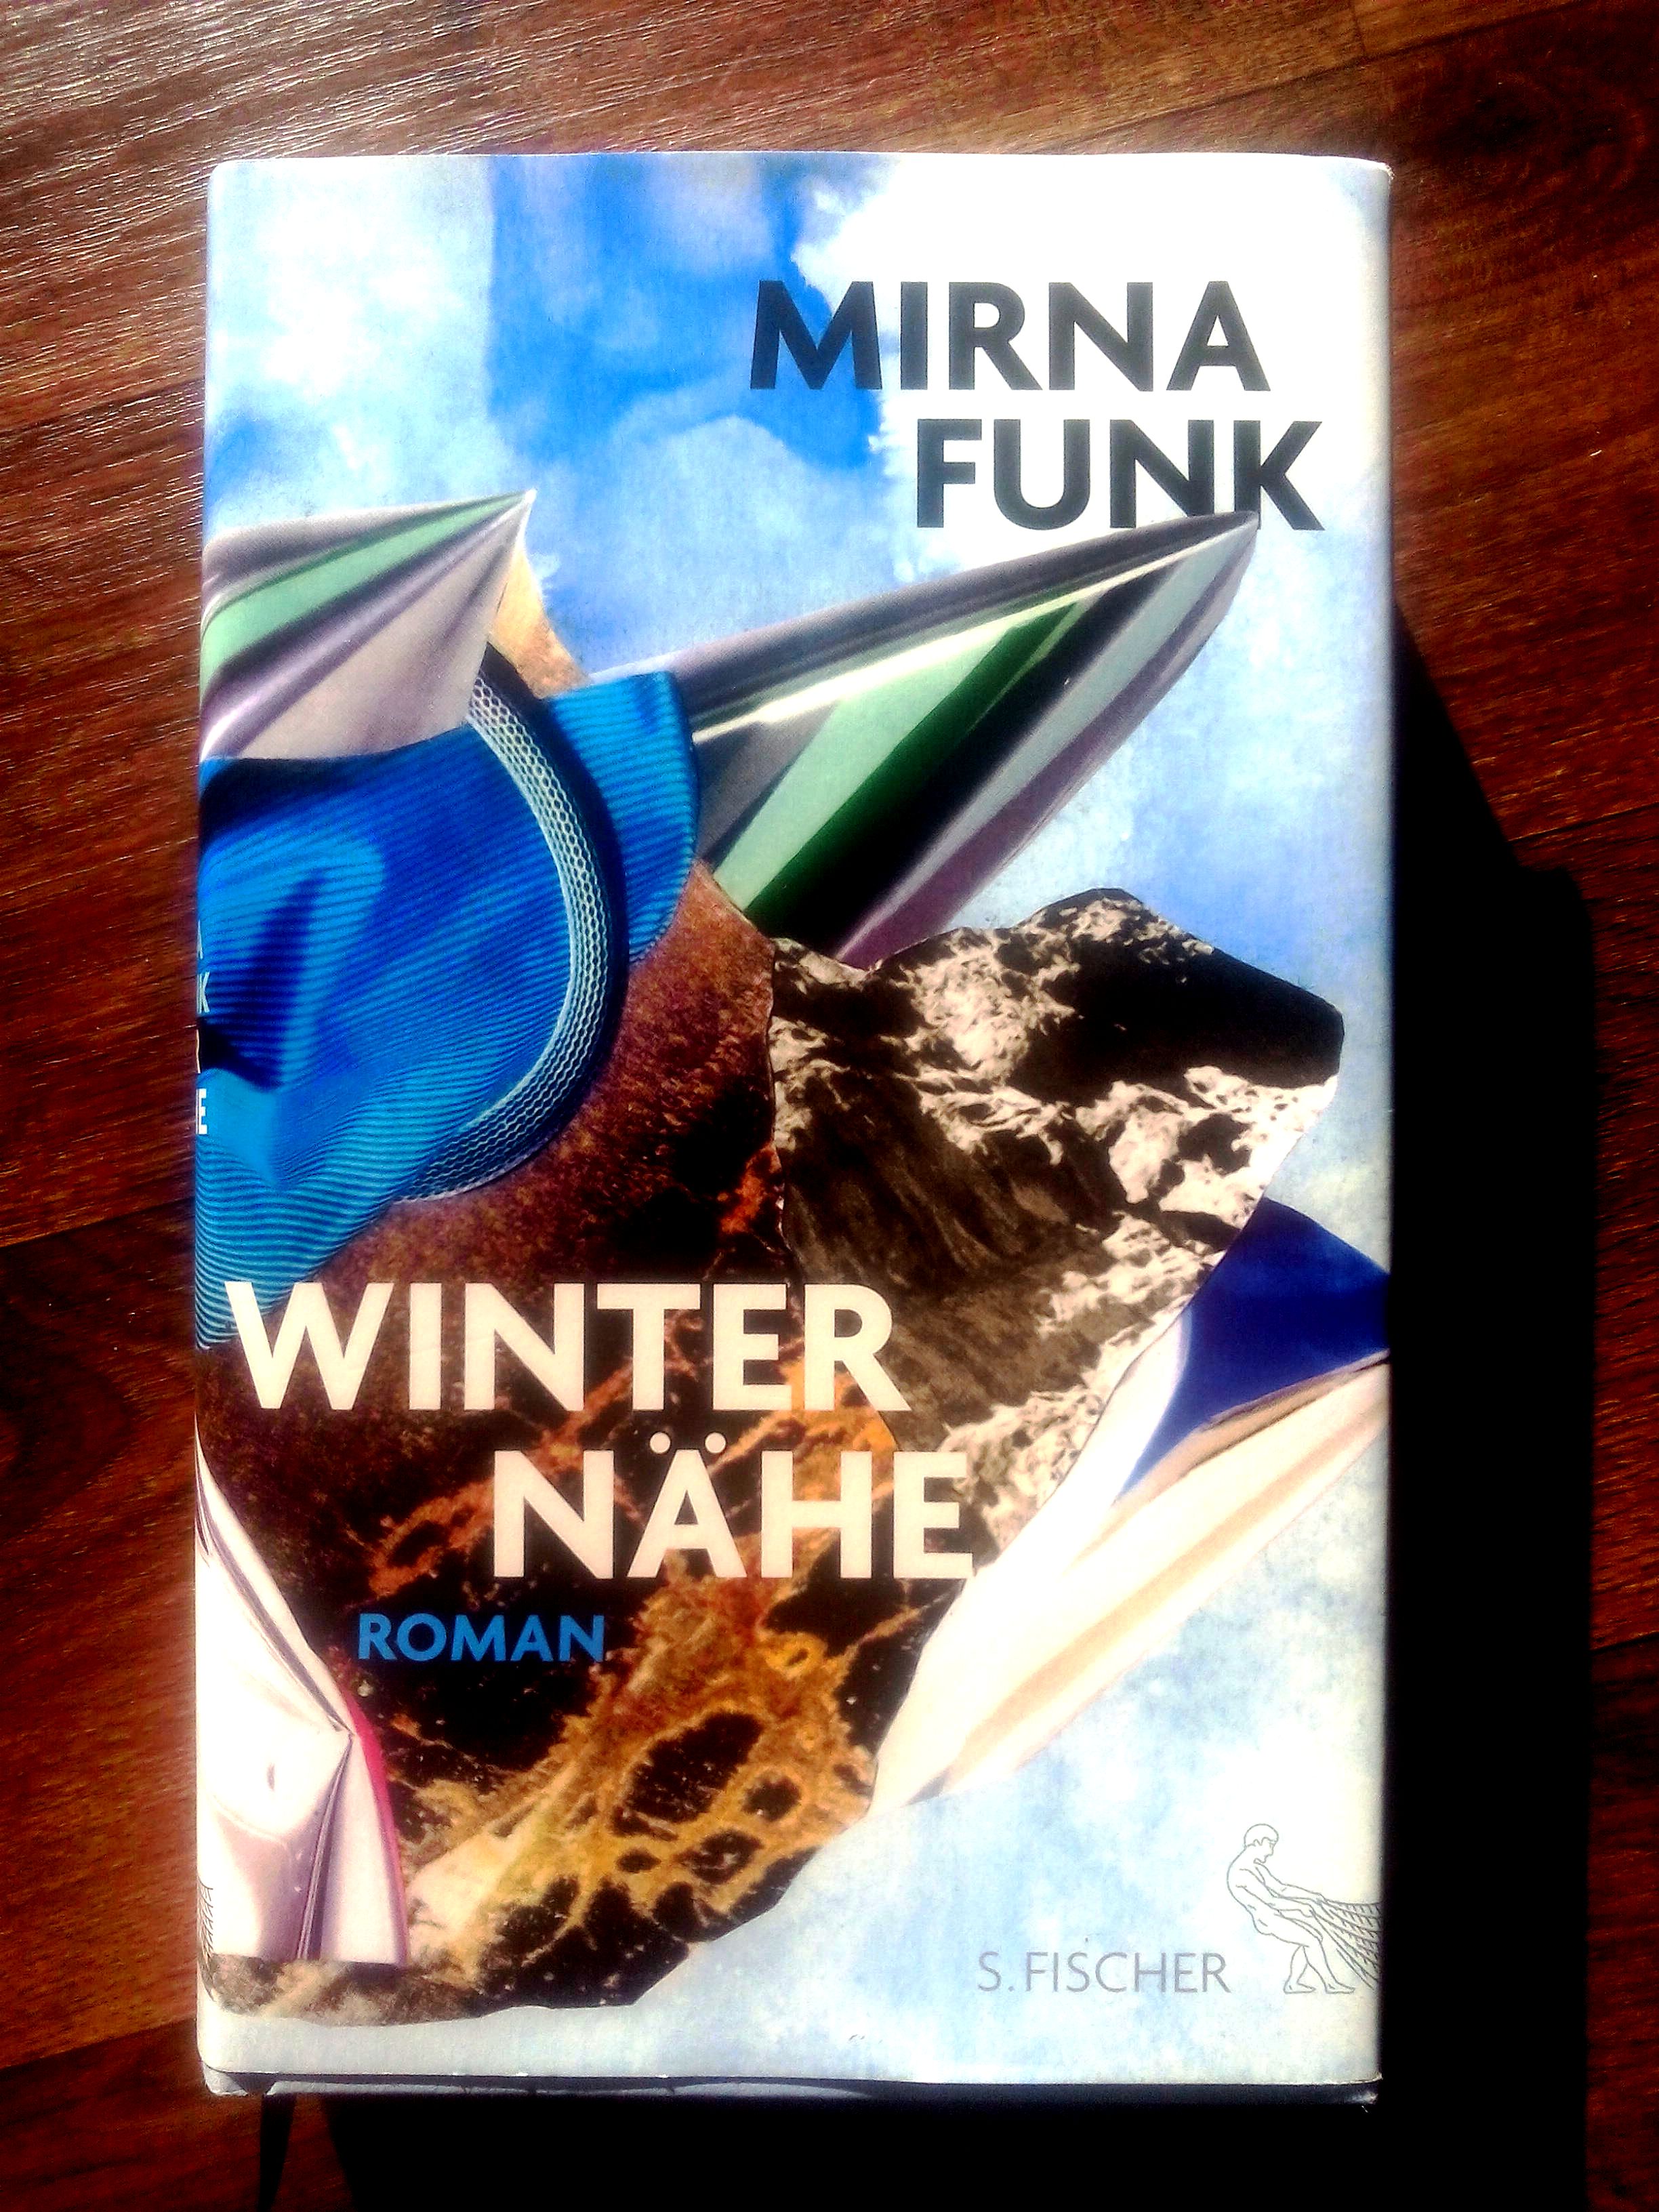 Mirna Funk "Winternähe"